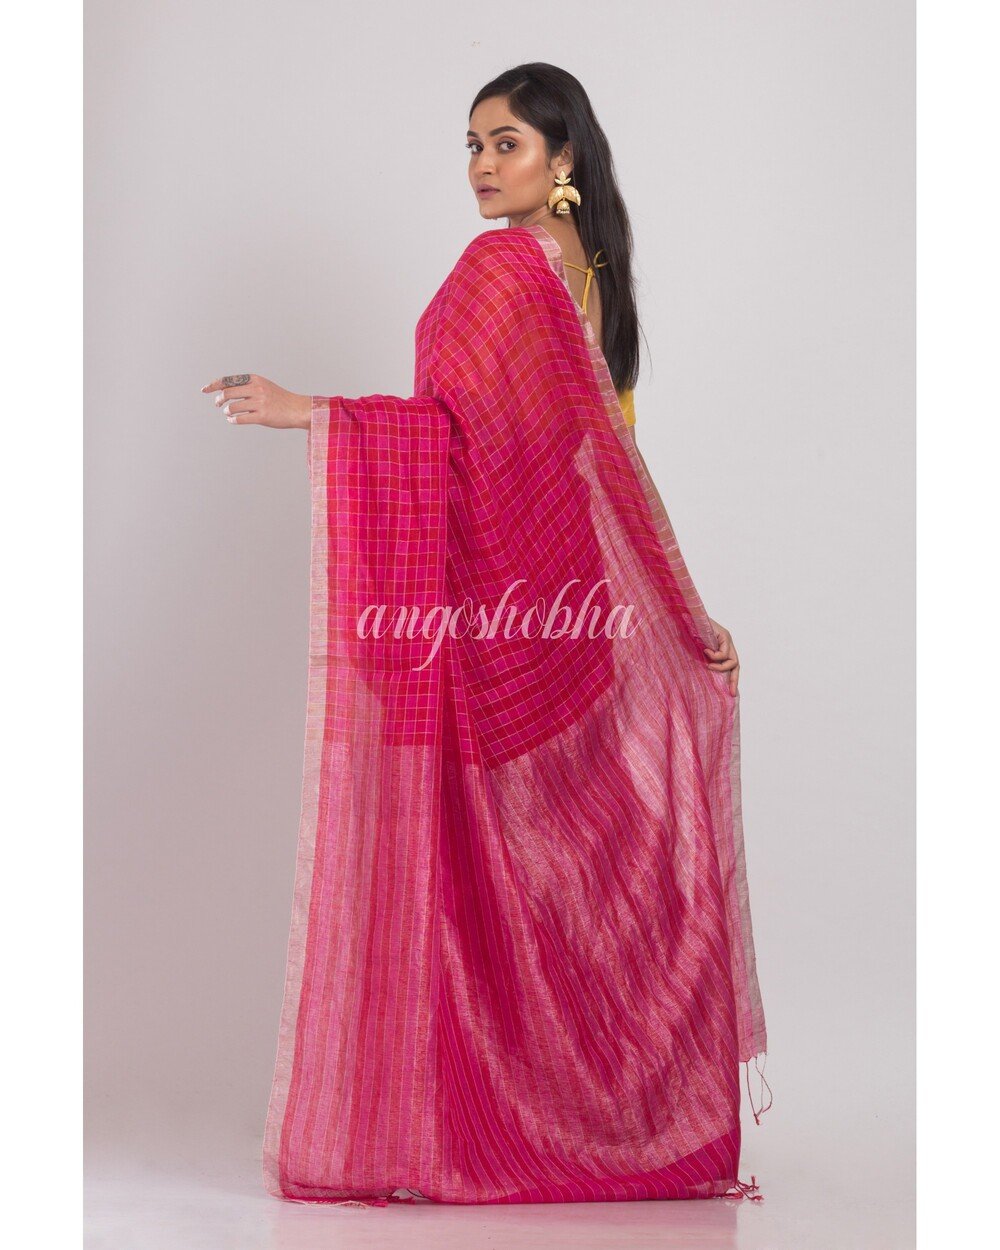 Women's Pink Handwoven Linen Saree - Angoshobha